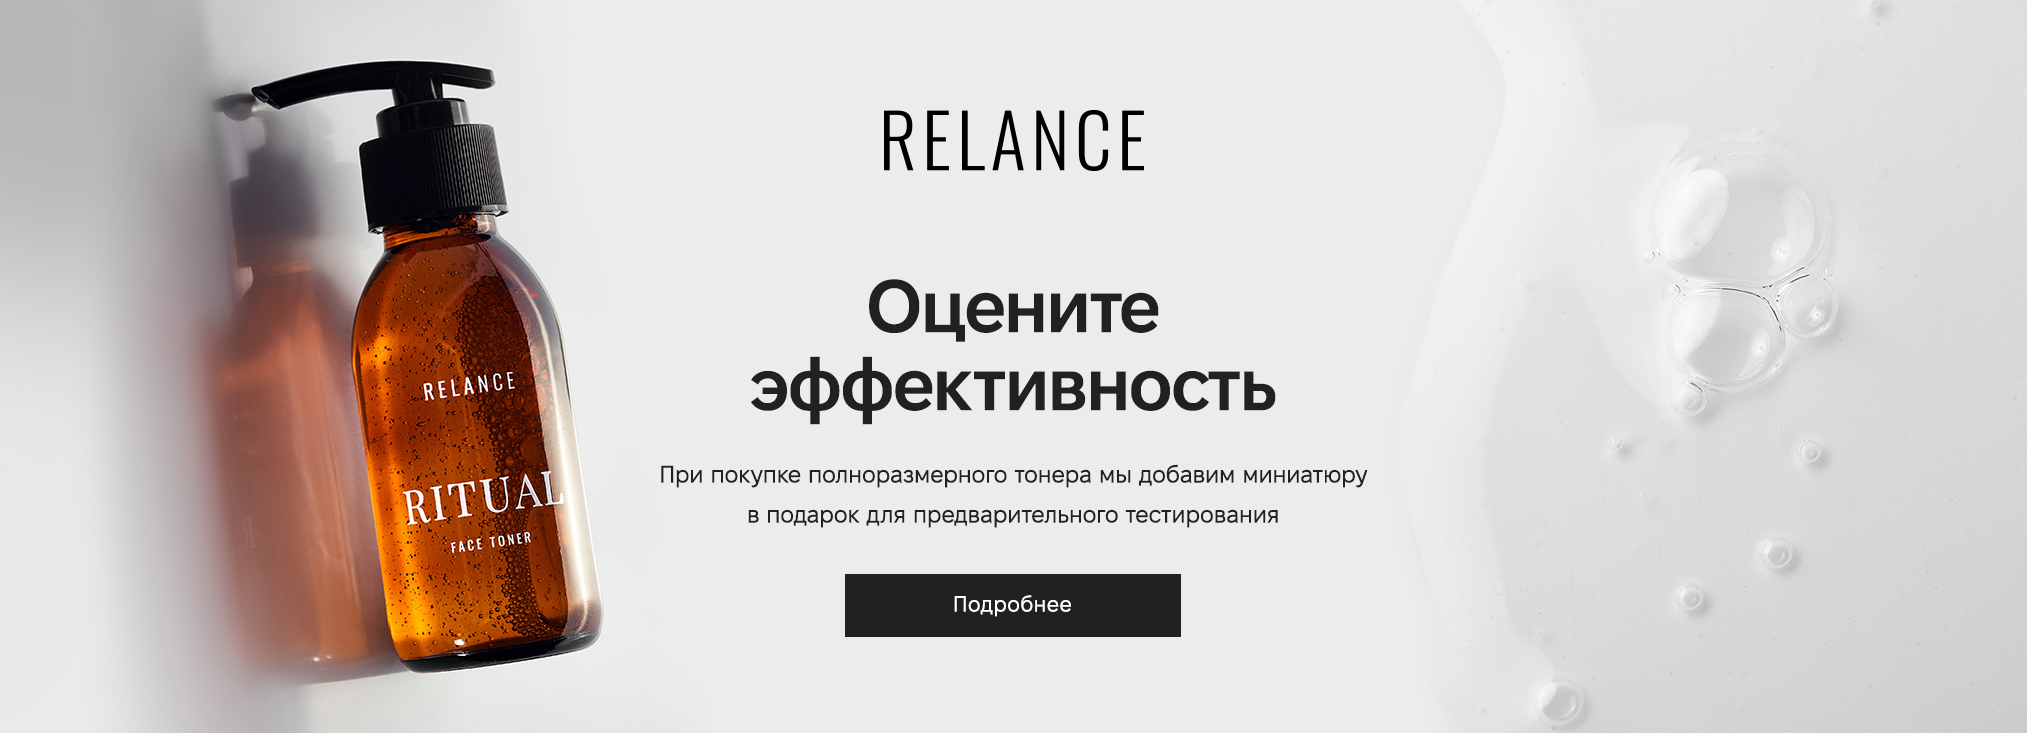 Relance983259